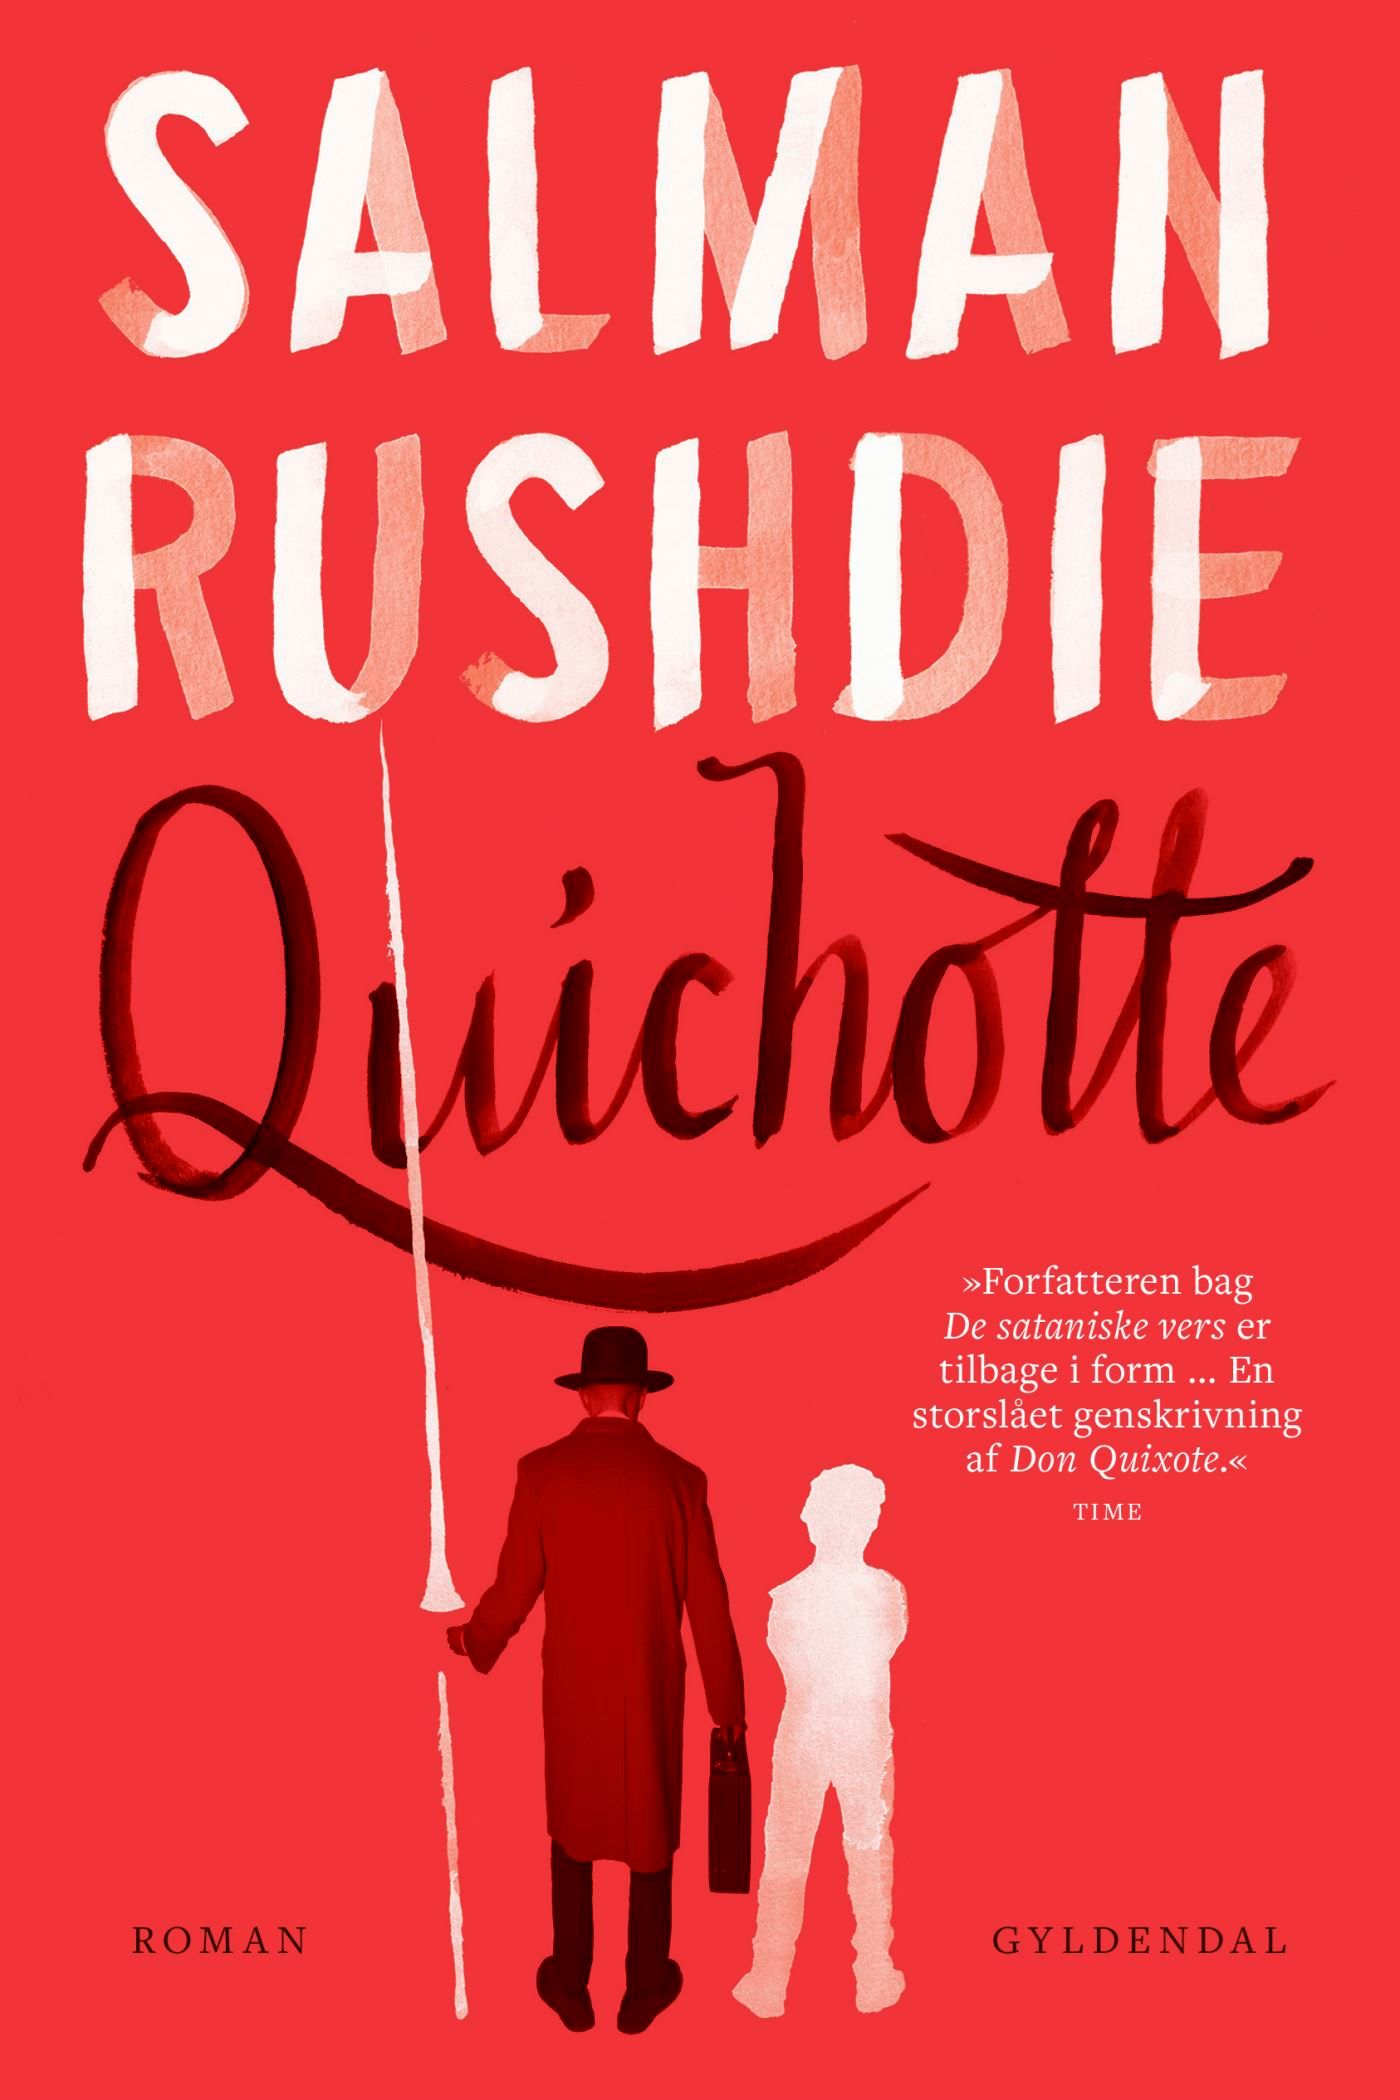 Quichotte, e-bok av Salman Rushdie